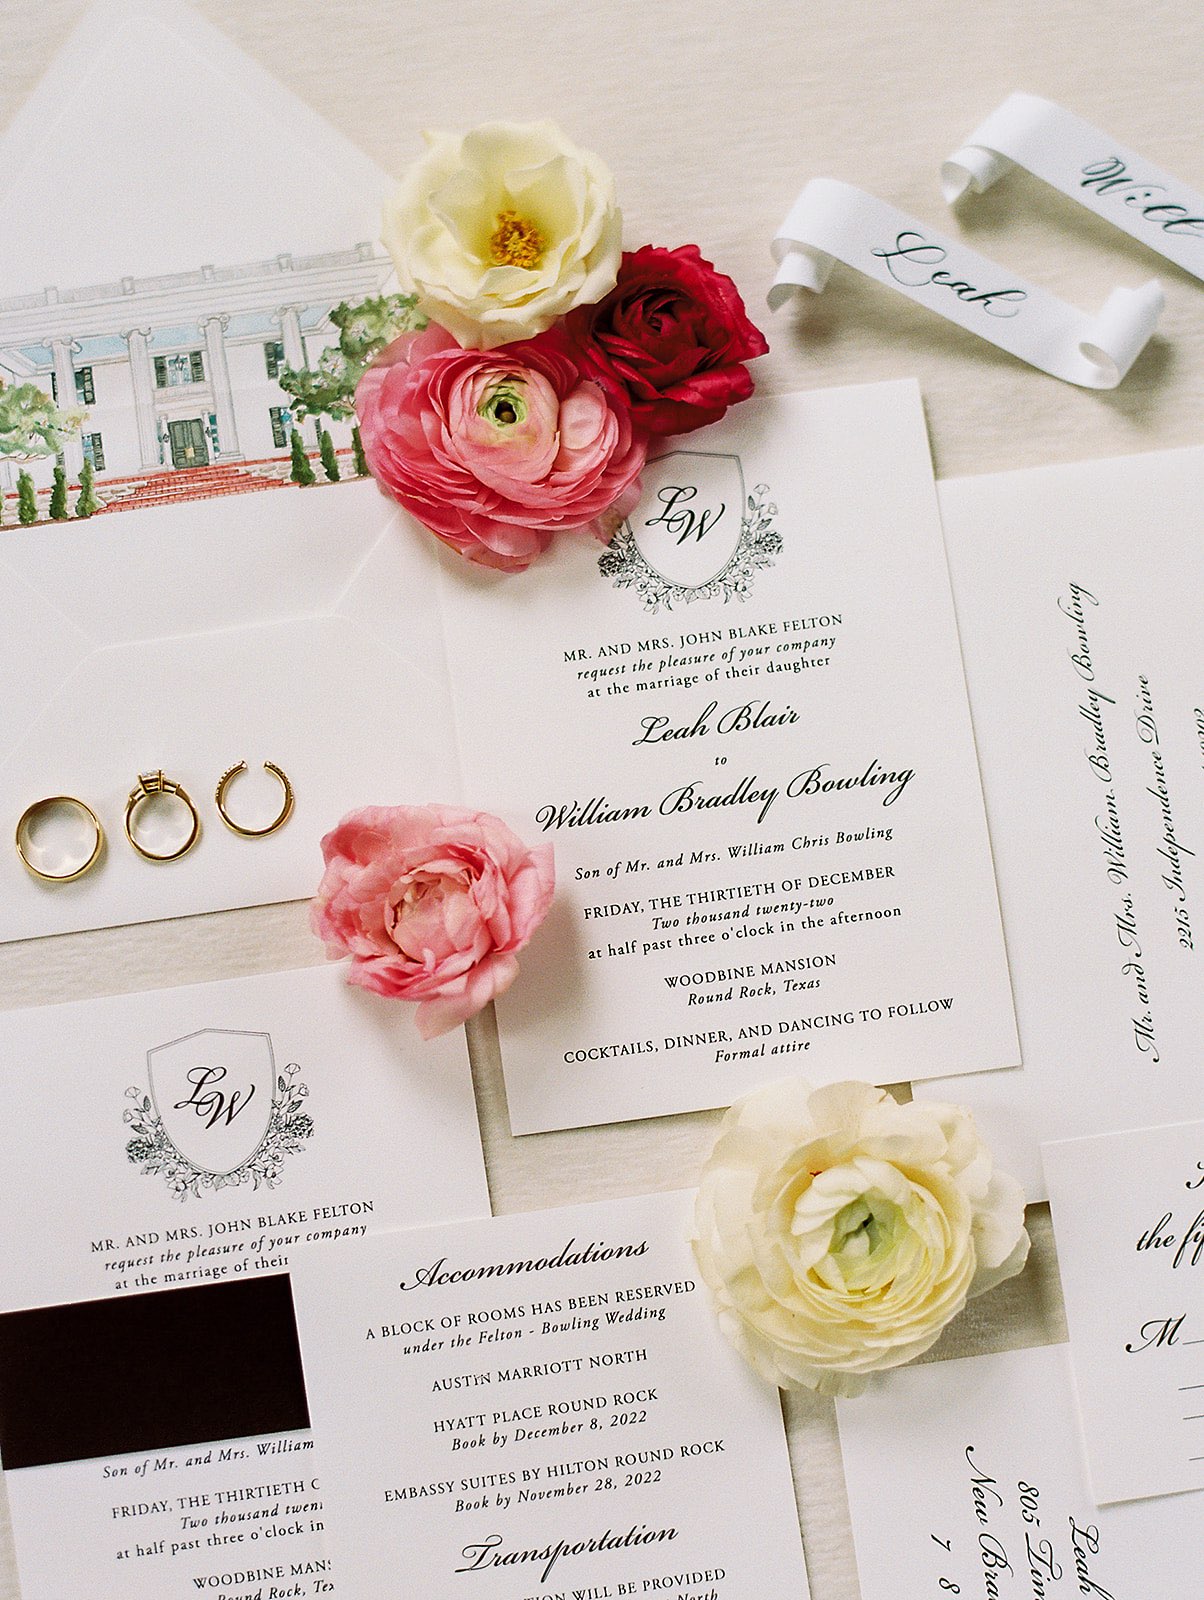 Elegant wedding invitation for woodbine mansion